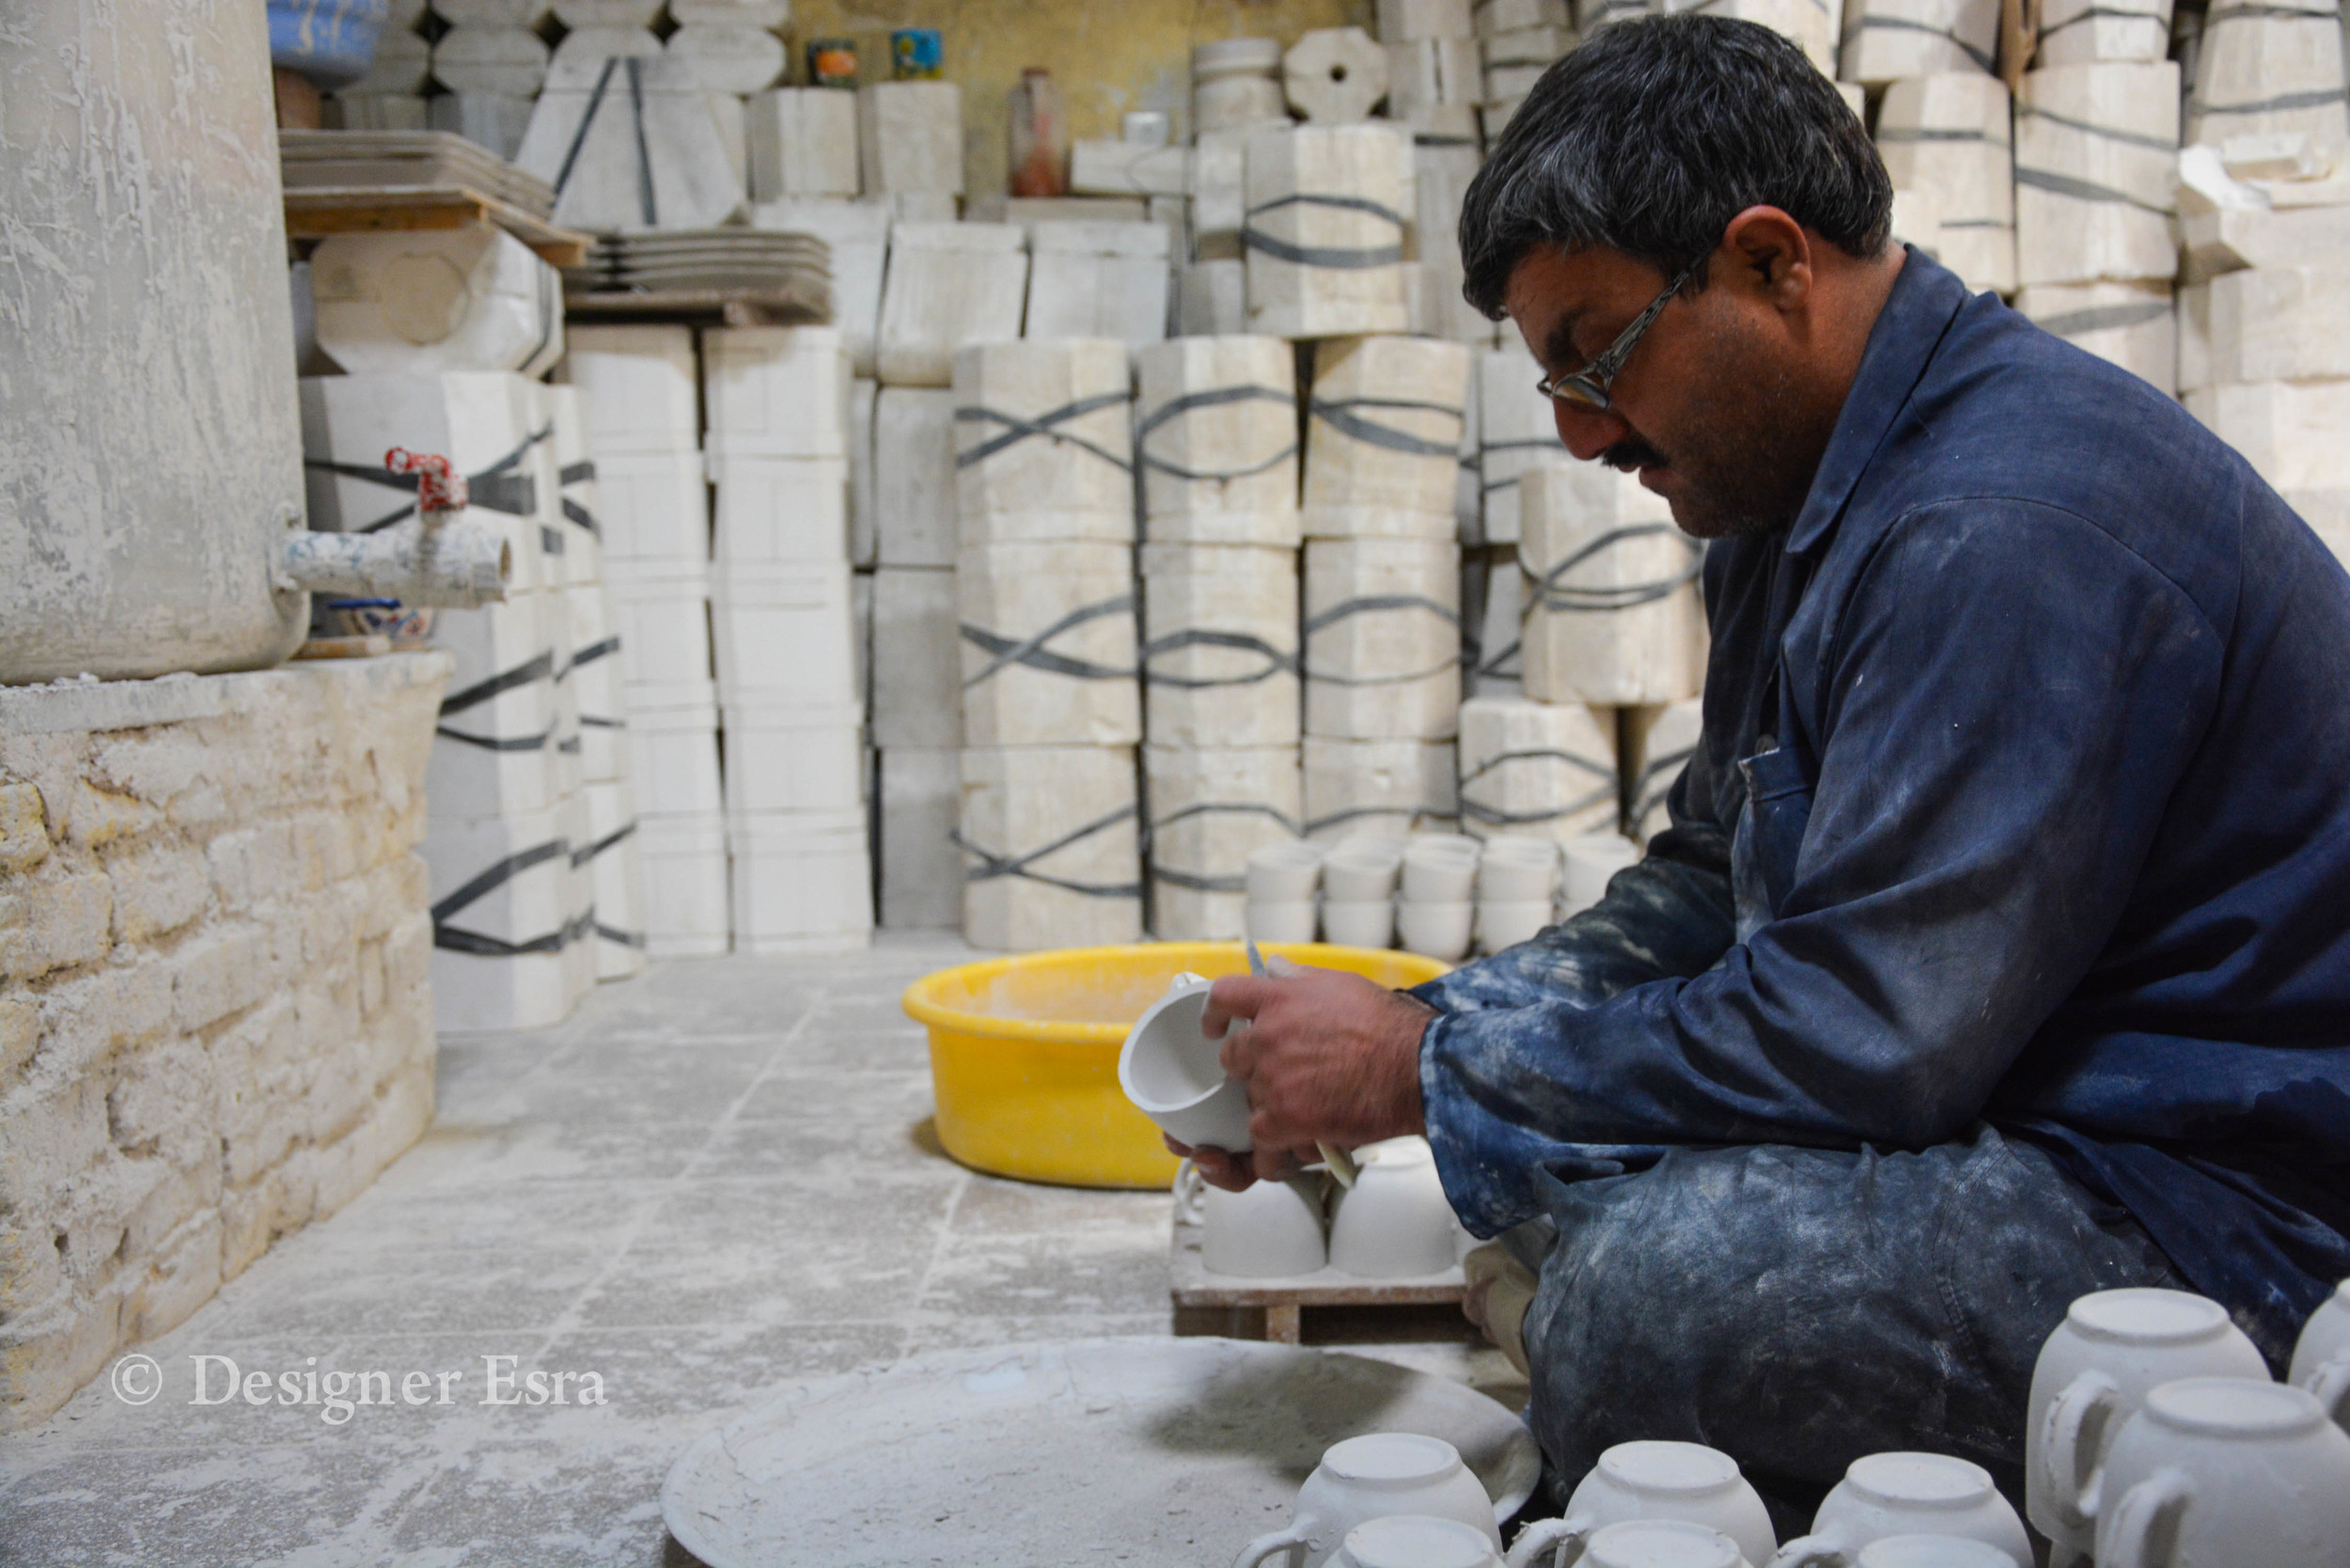 Sanding pottery in Iran 